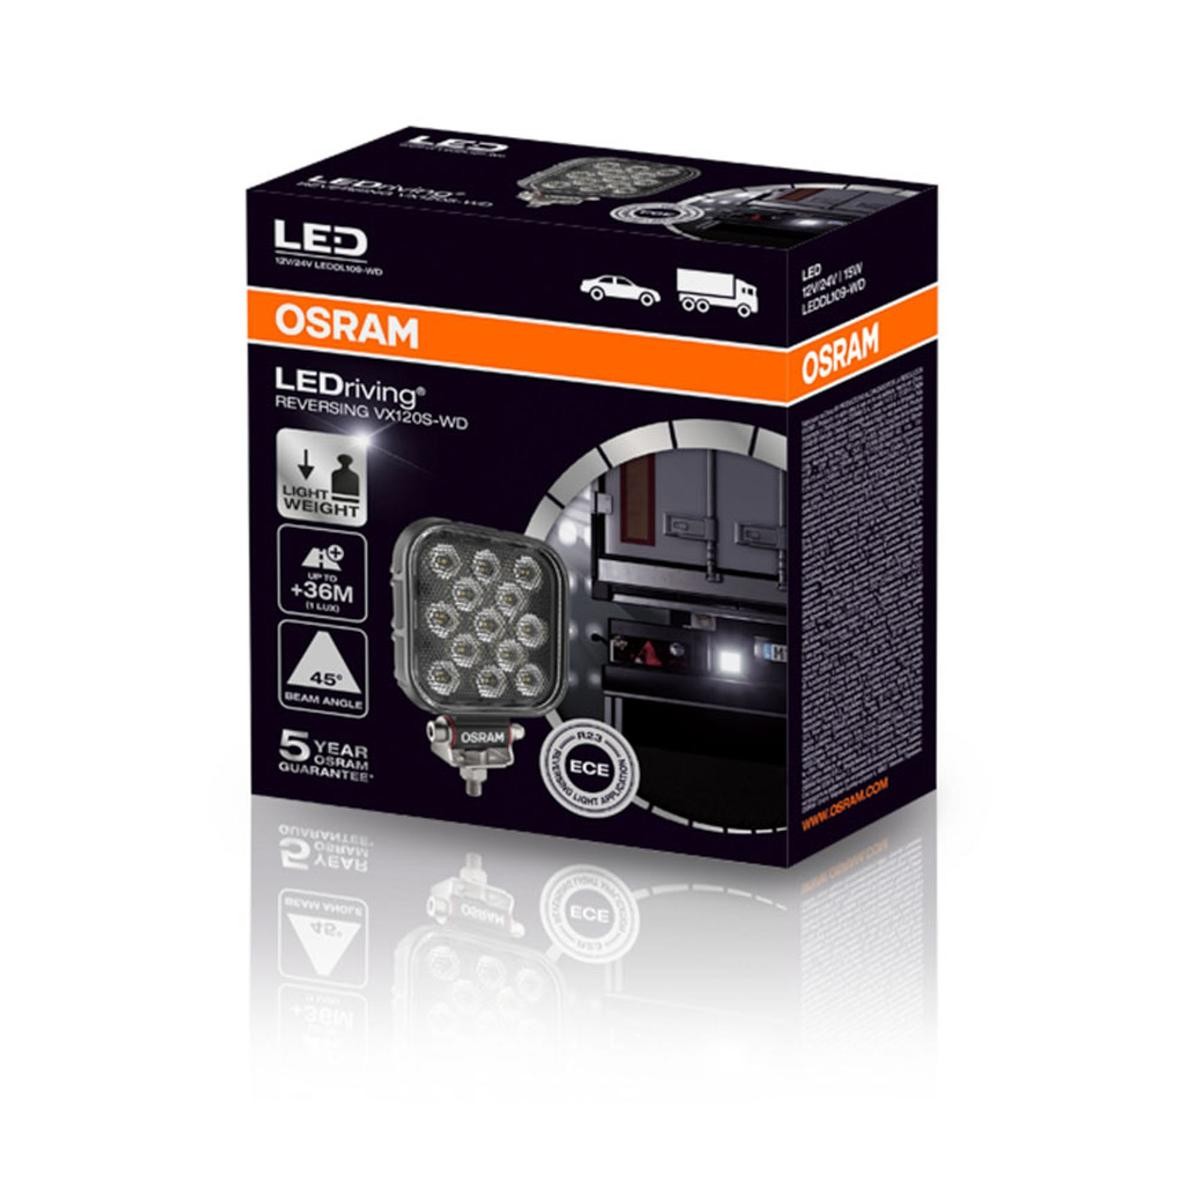 LEDDL109-WD OSRAM LEDriving driving lights - Value Series Luce di retromarcia  LED, rettangolare LEDDL109-WD ❱❱❱ prezzo e esperienza